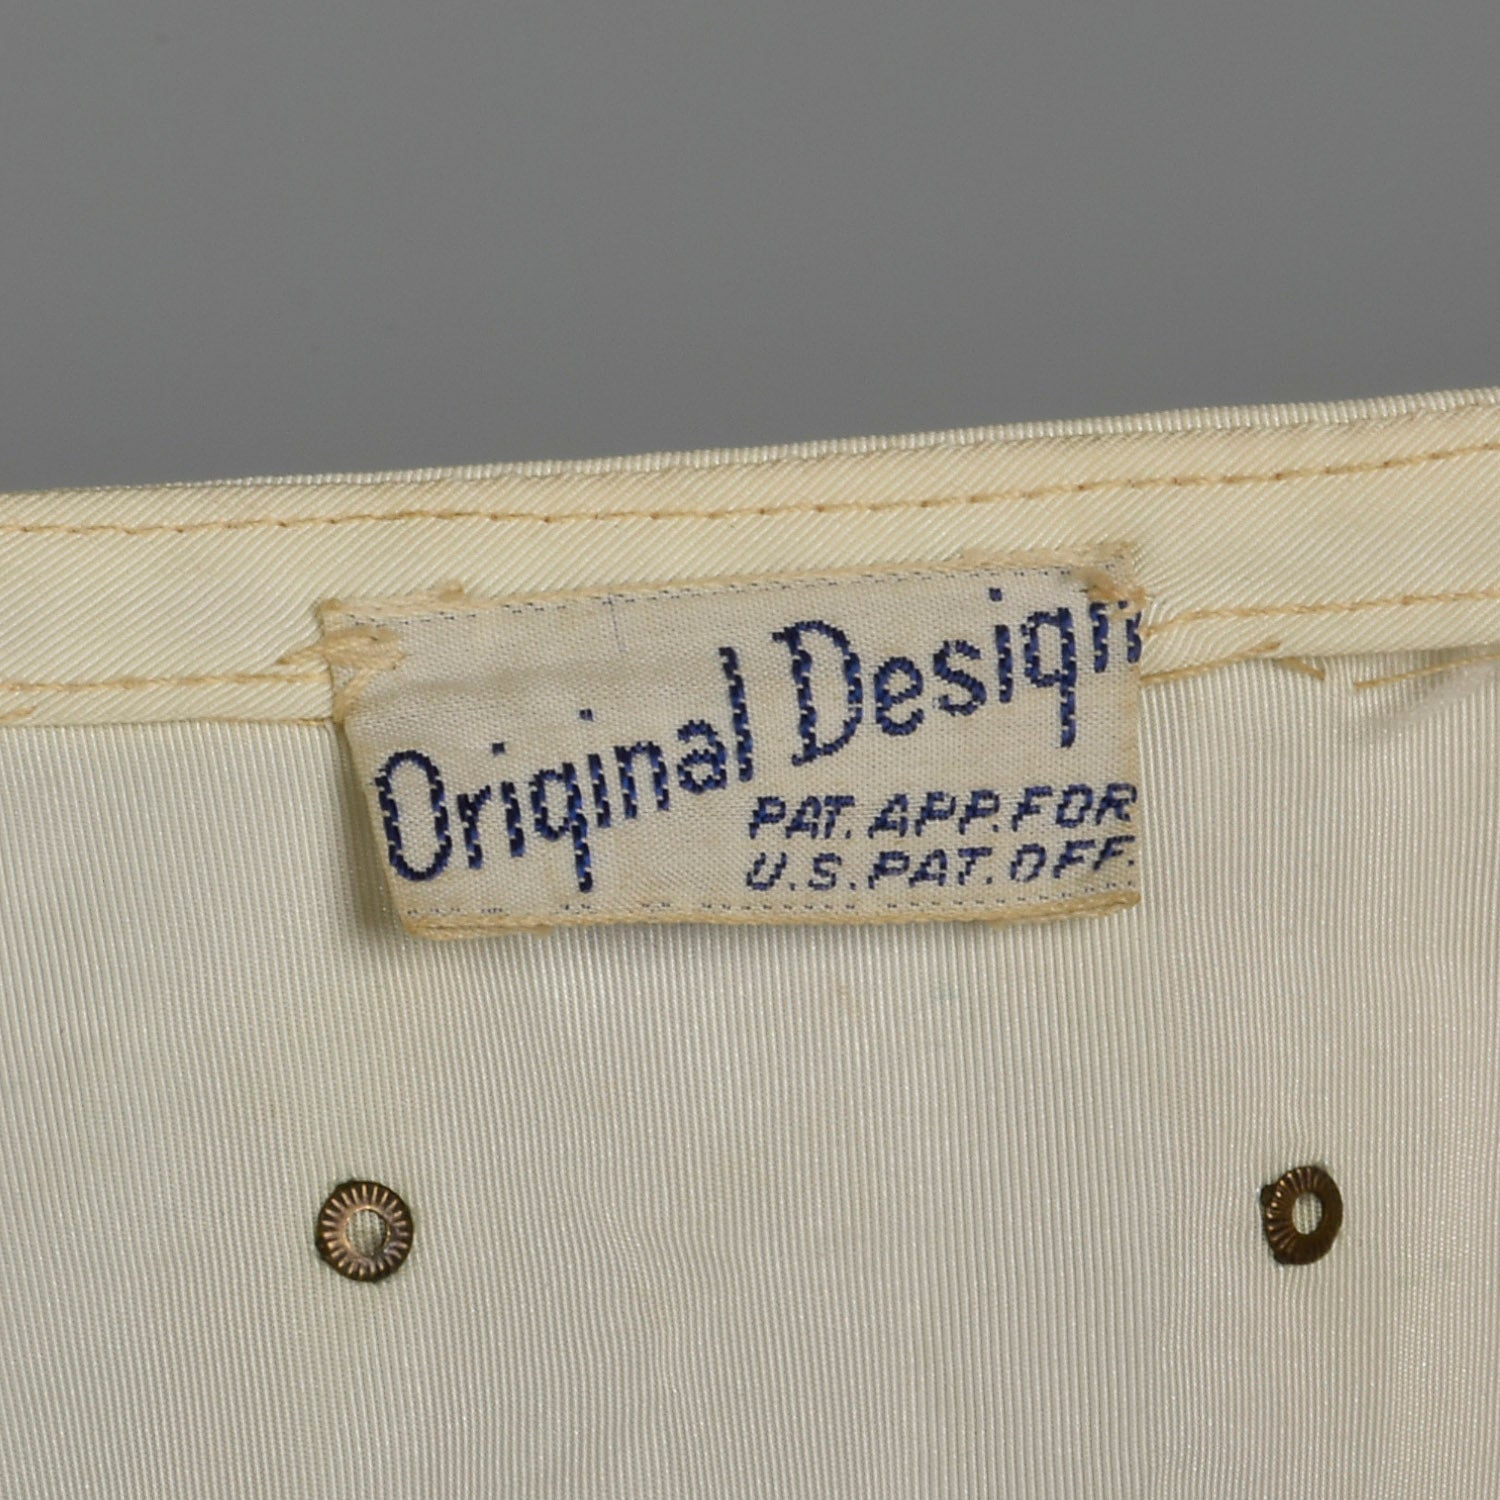 XXS 1940s Off White Wedding Dress and Jacket Set